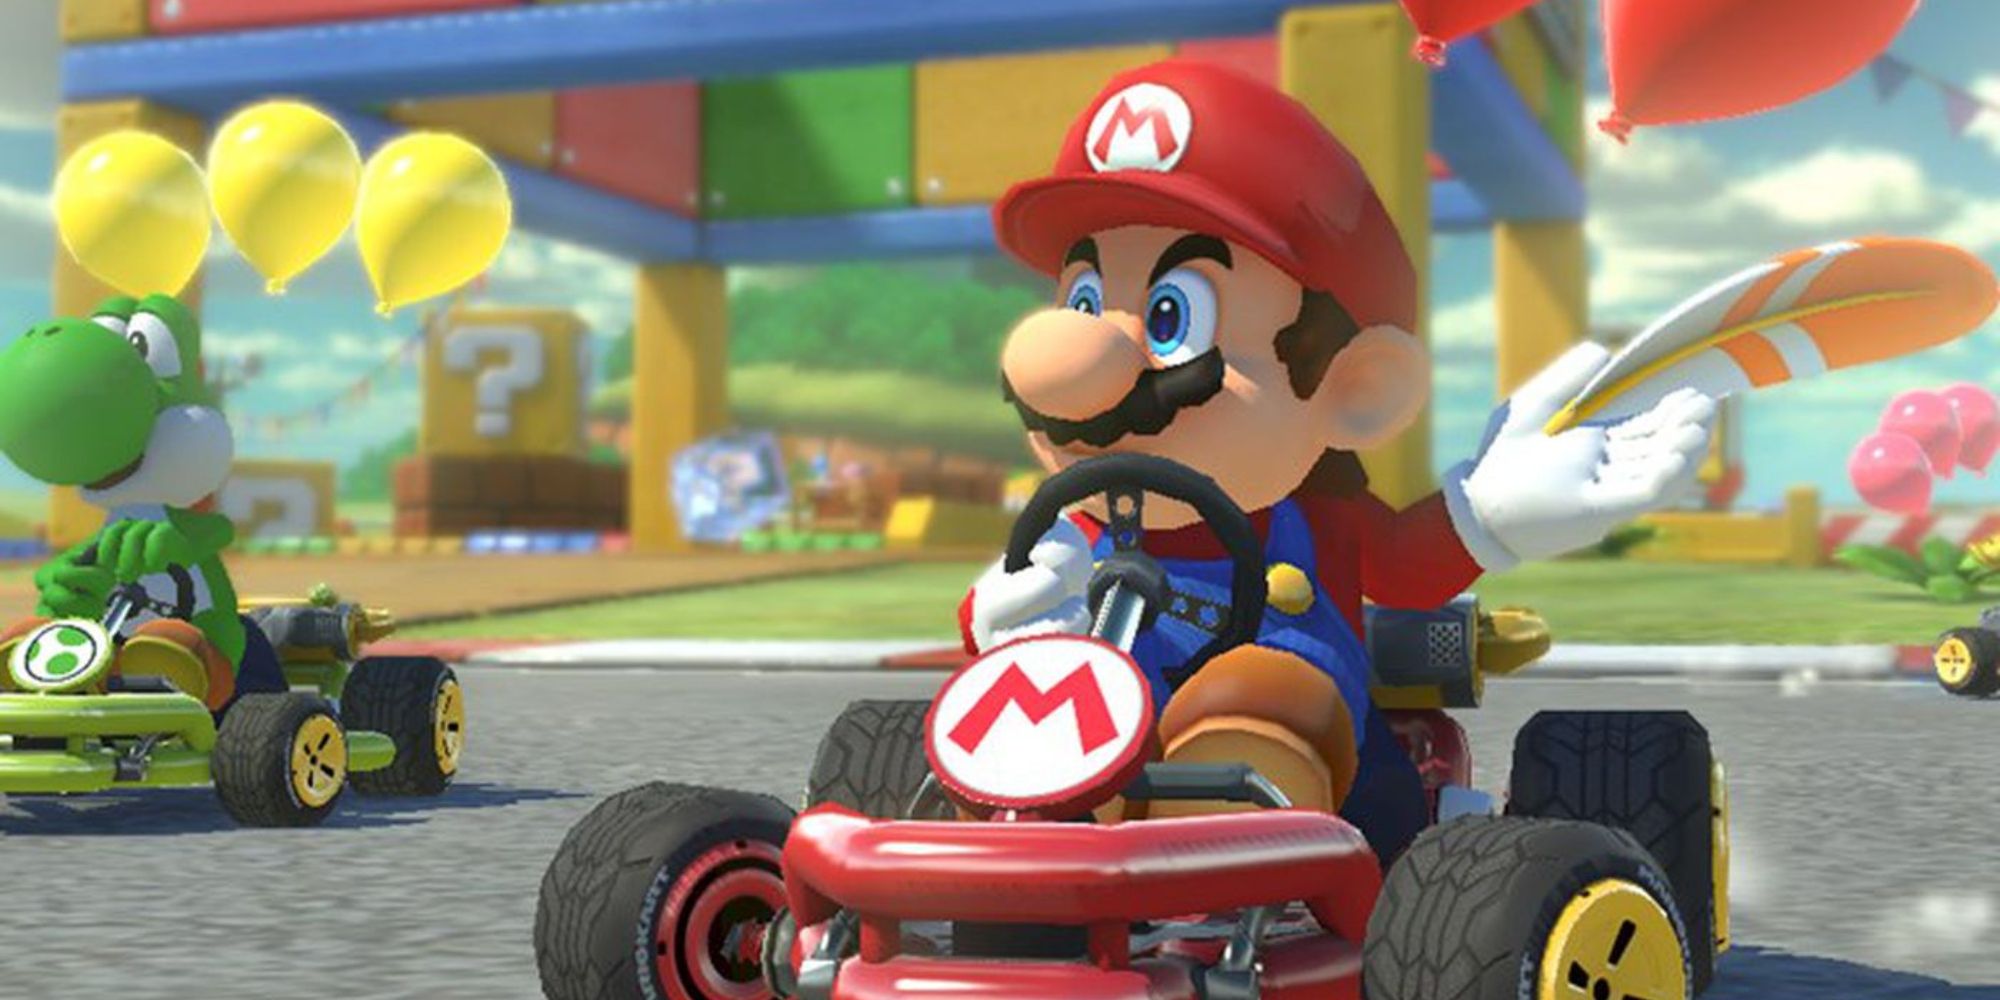 Mario and Yoshi racing in karts with balloons